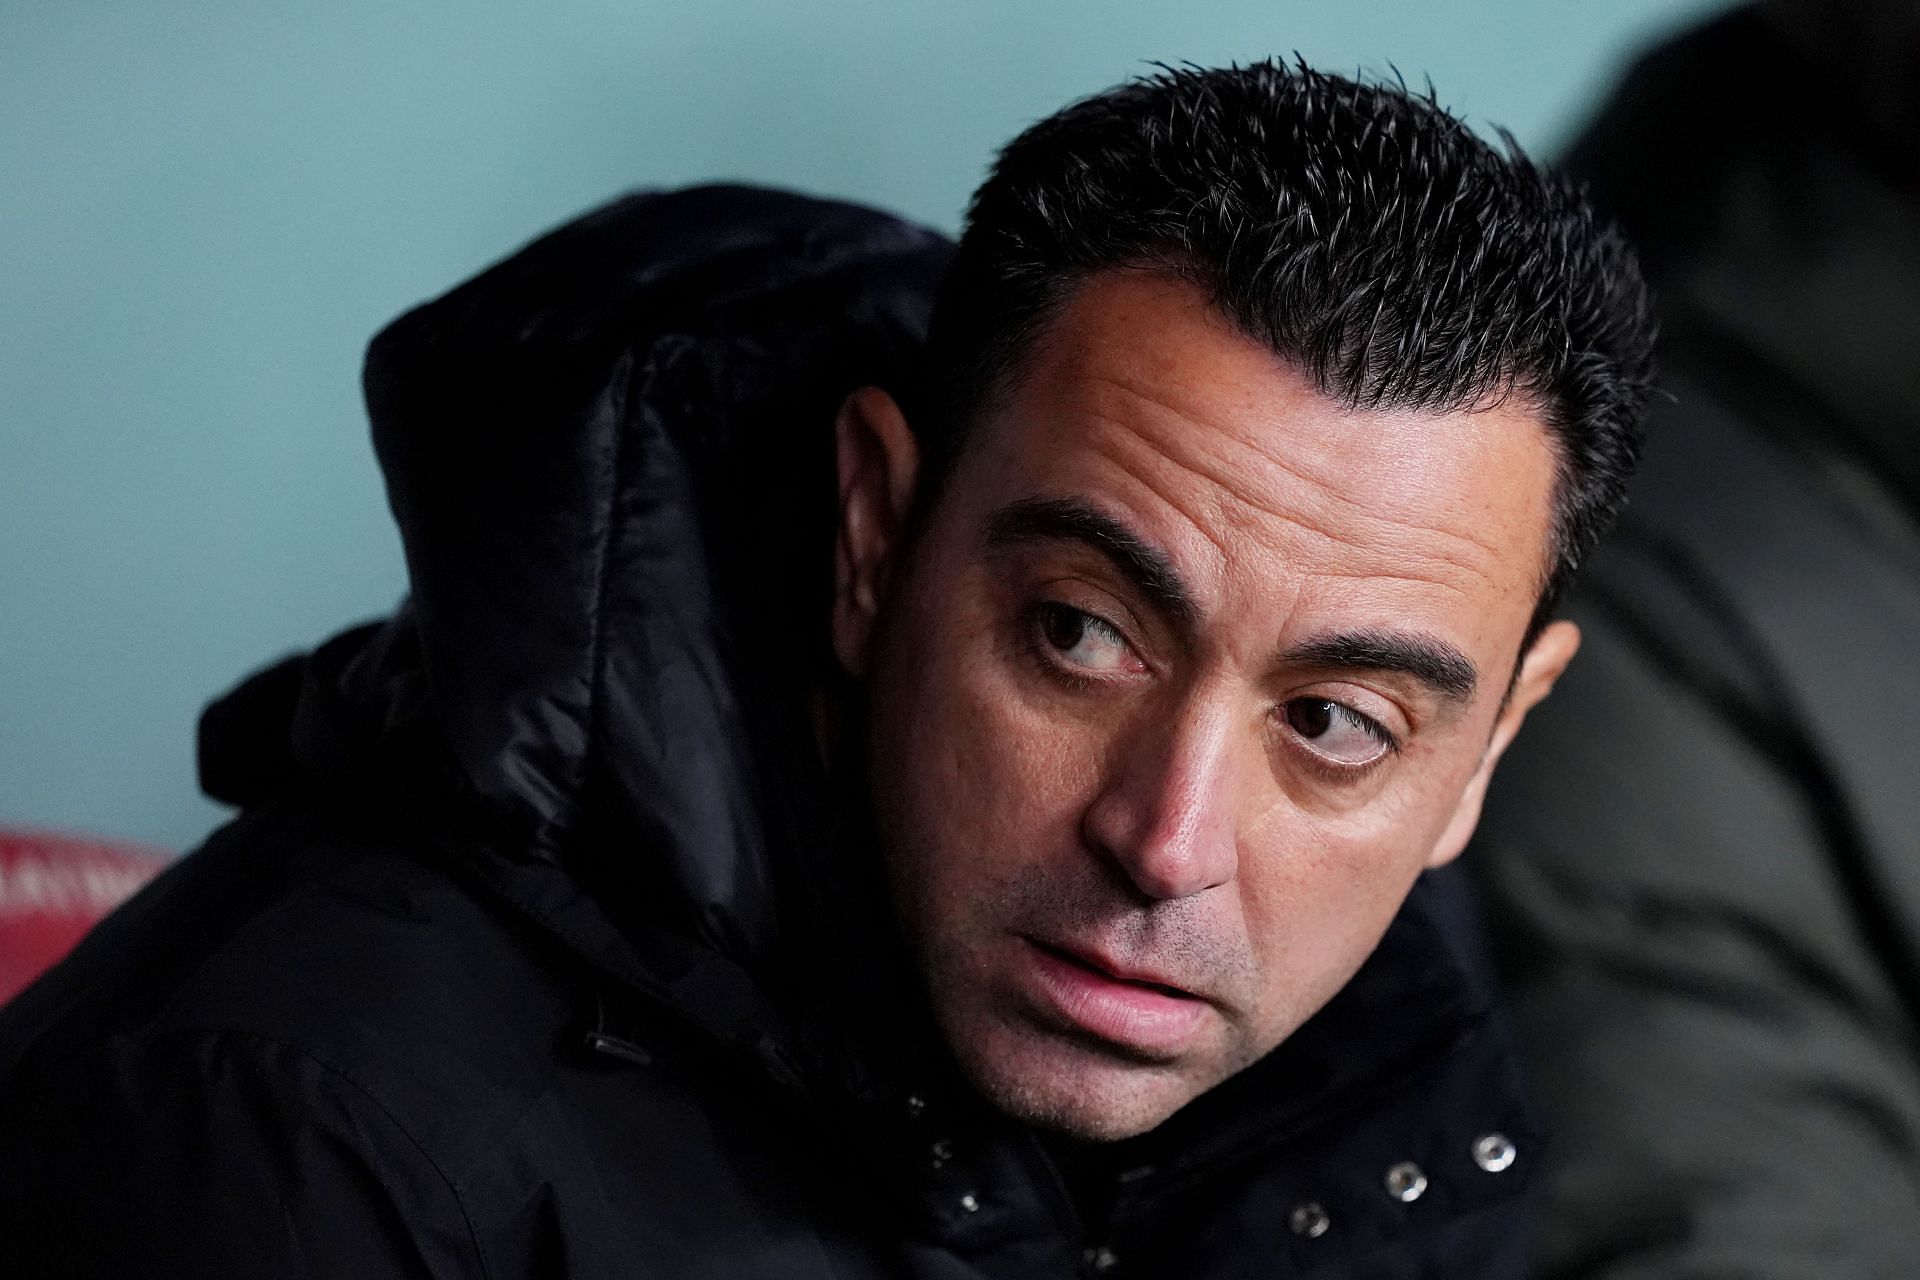 Barcelona manager Xavi